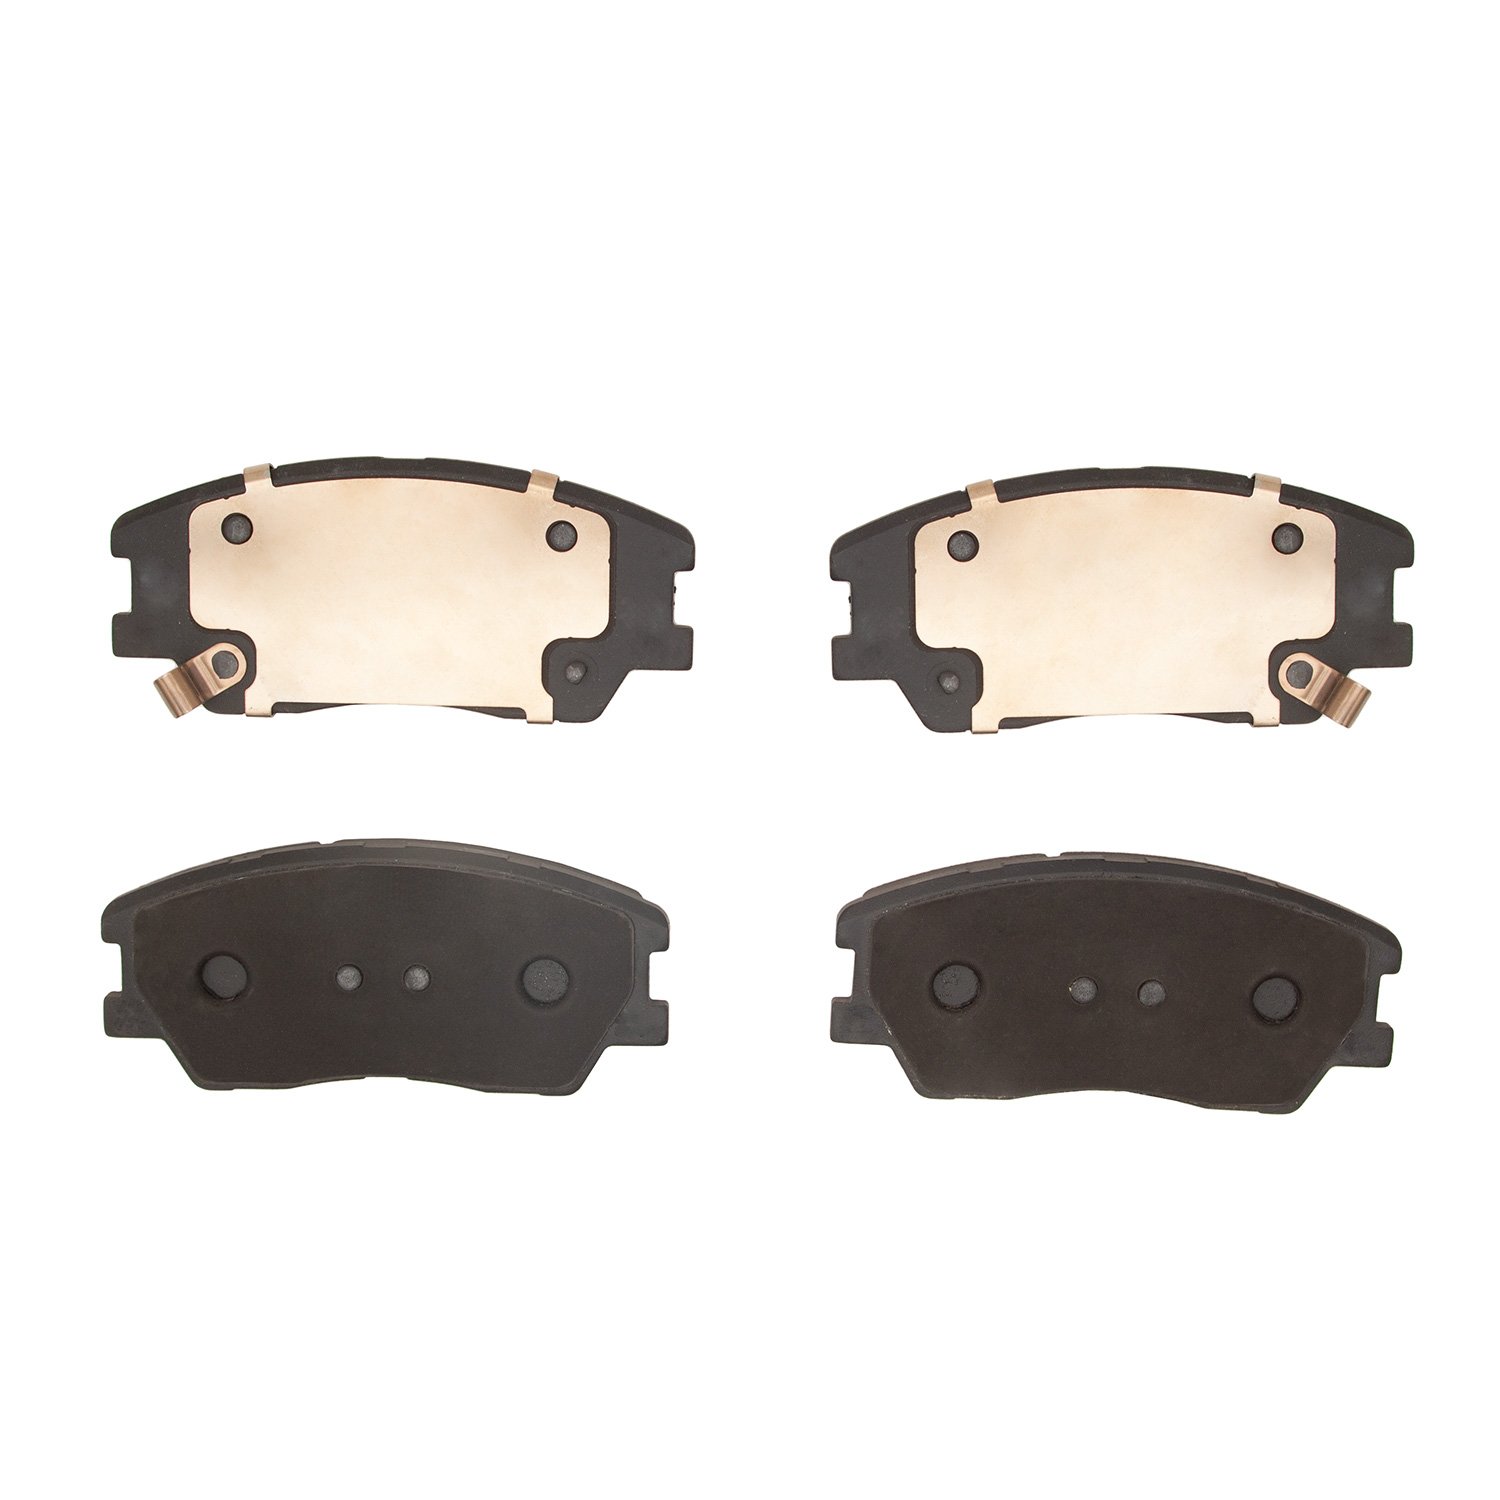 1551-2287-00 5000 Advanced Ceramic Brake Pads, Fits Select Kia/Hyundai/Genesis, Position: Front